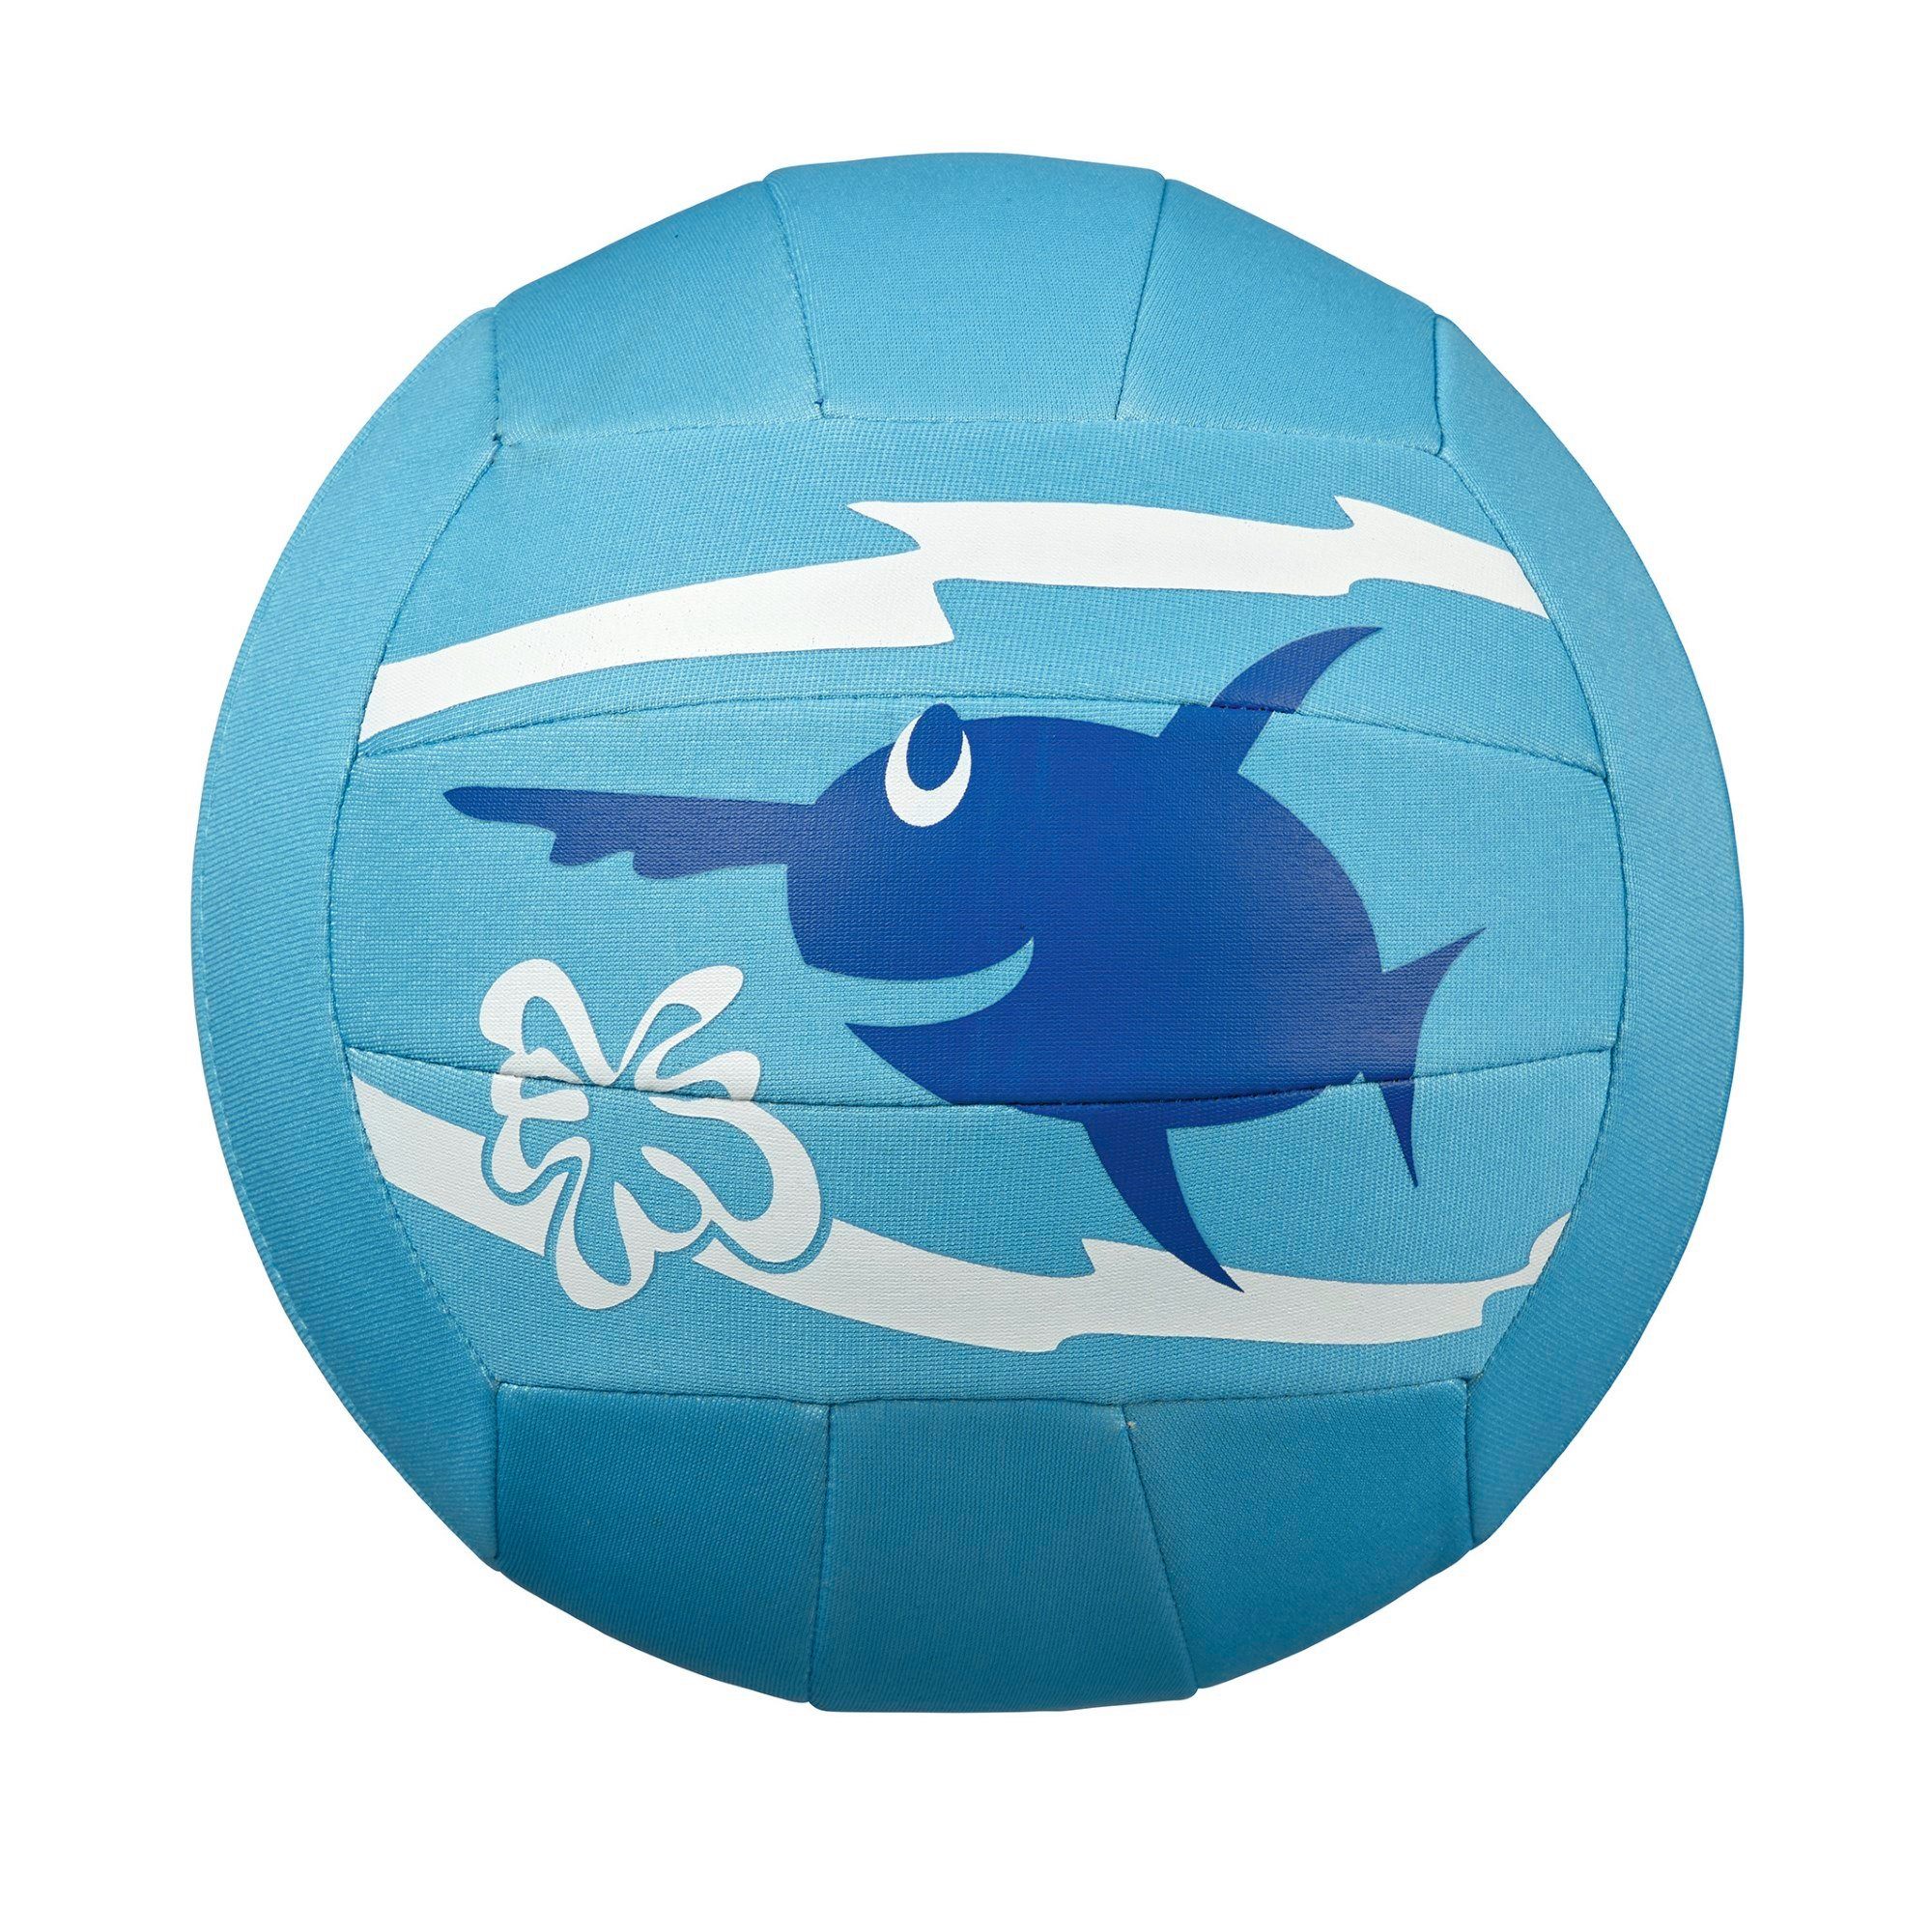 Beermann SEALIFE BECO Beach 21cm Ball blau Beco Spielball Neopren